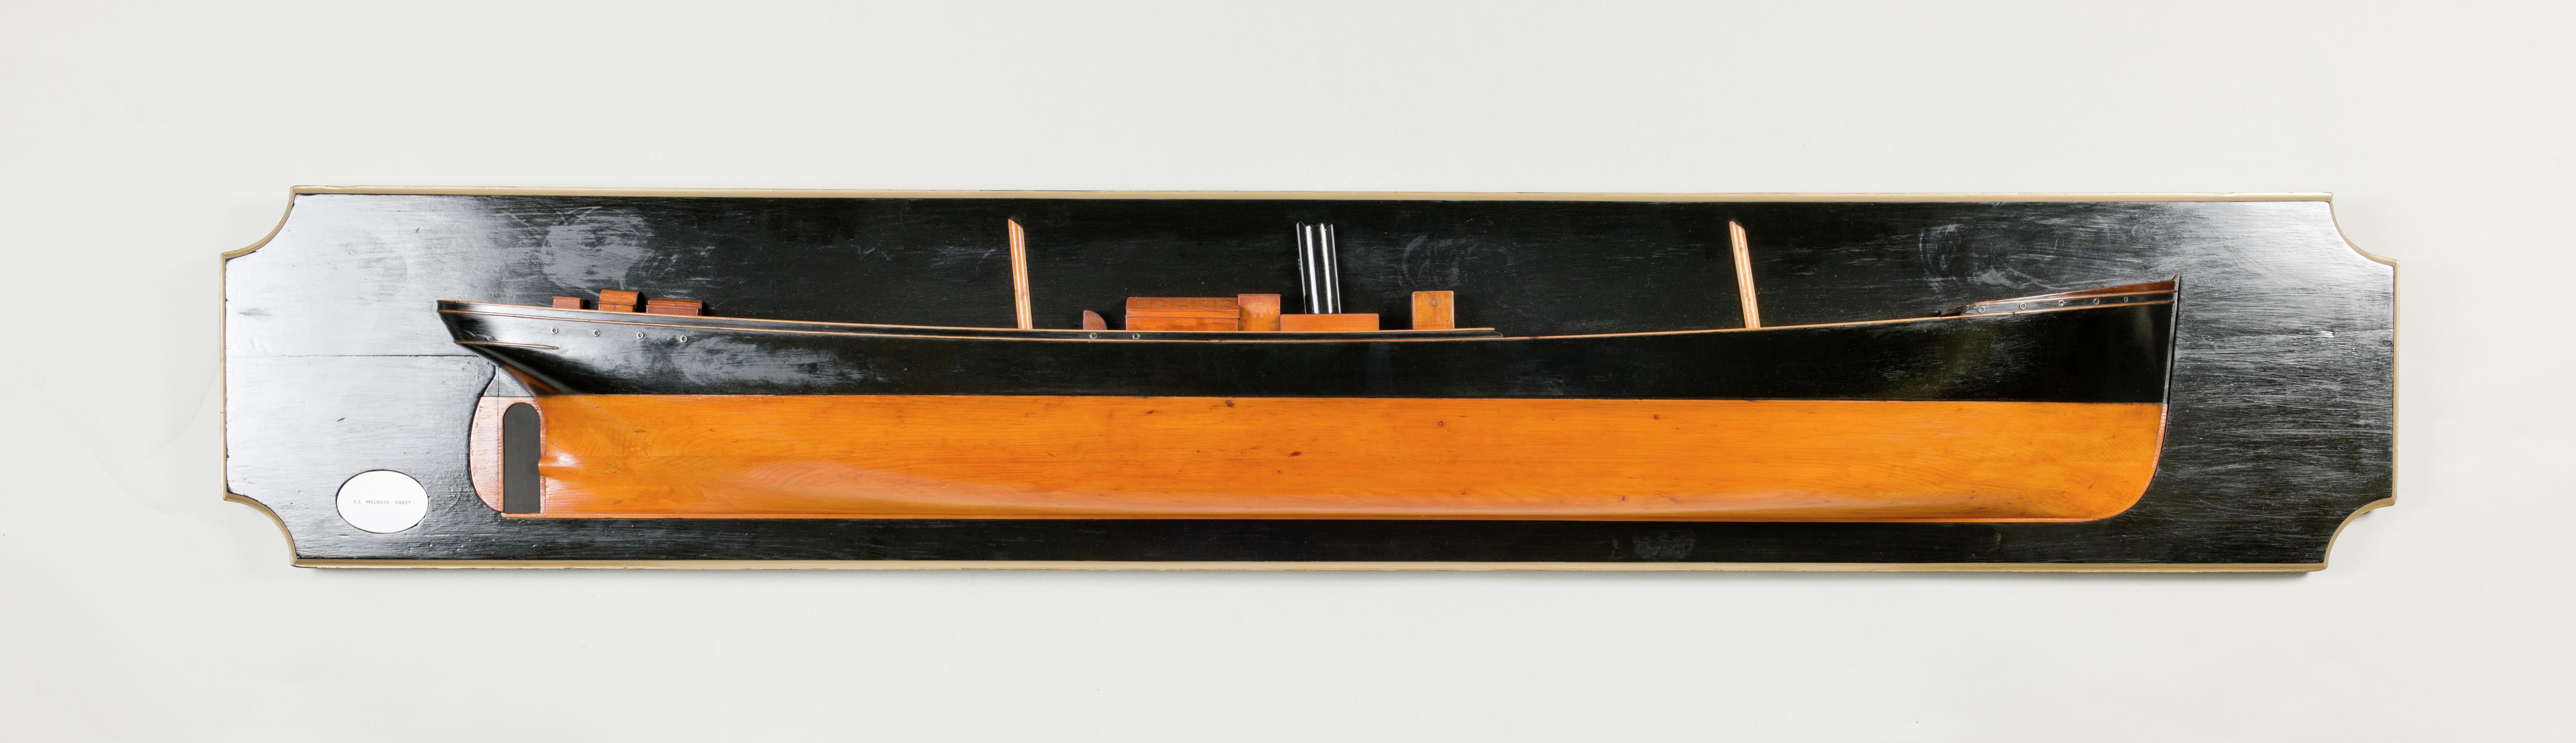 S.S. MELROSE ABBEY, half hull ship model